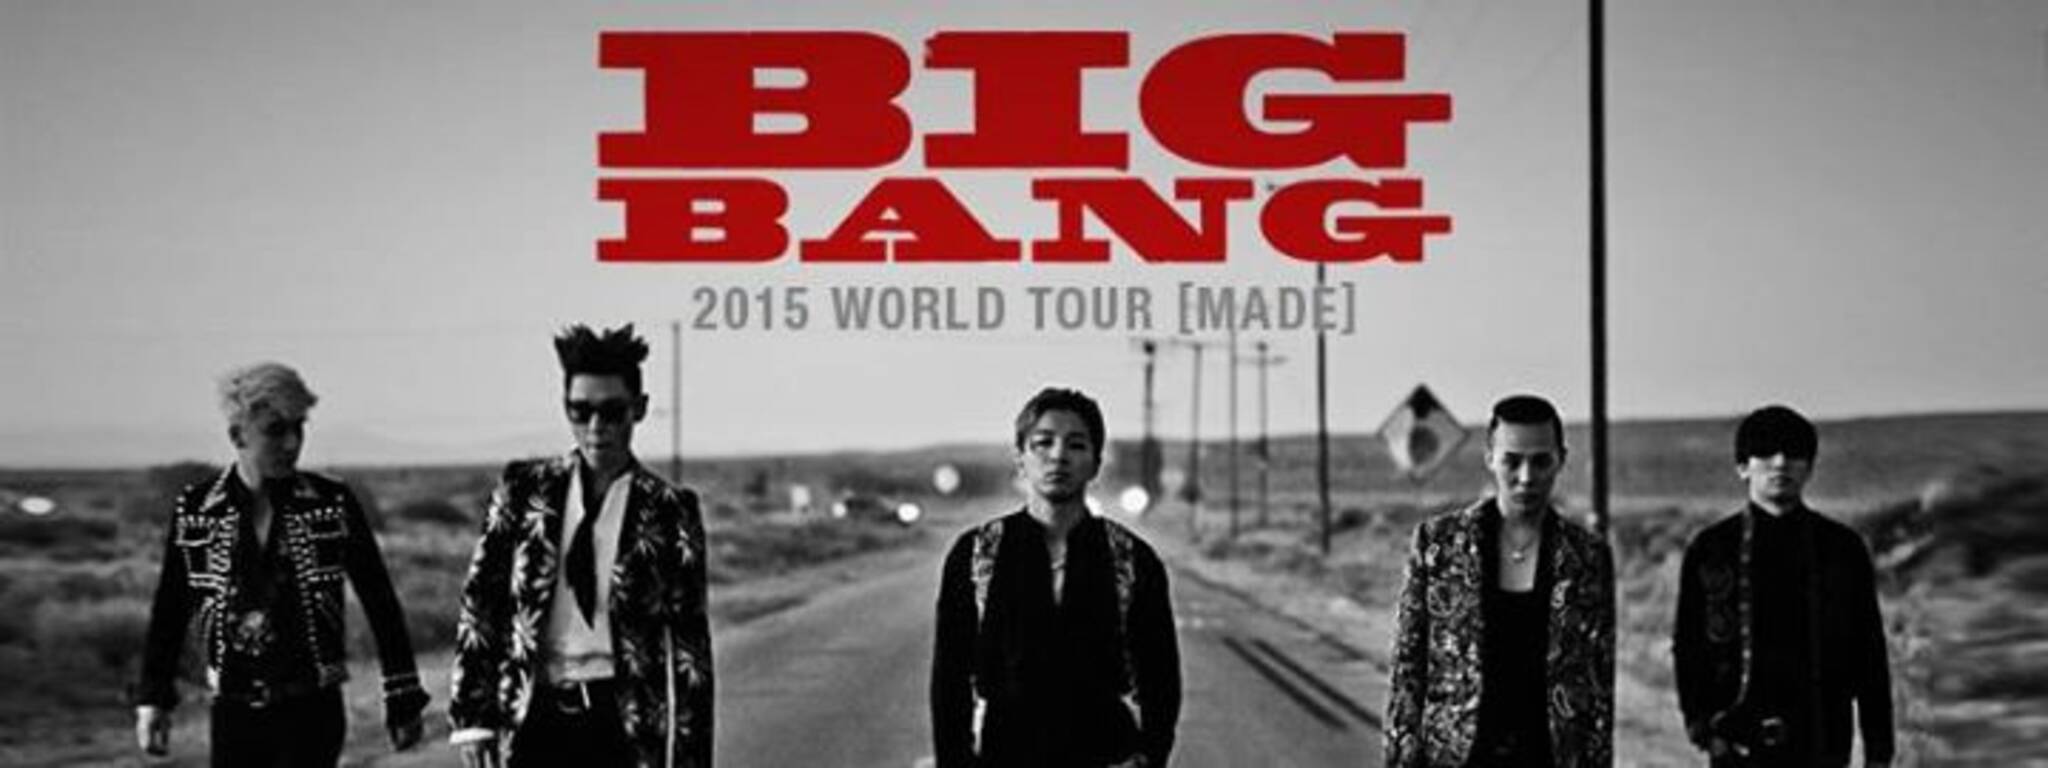 bigbang world tour 2015